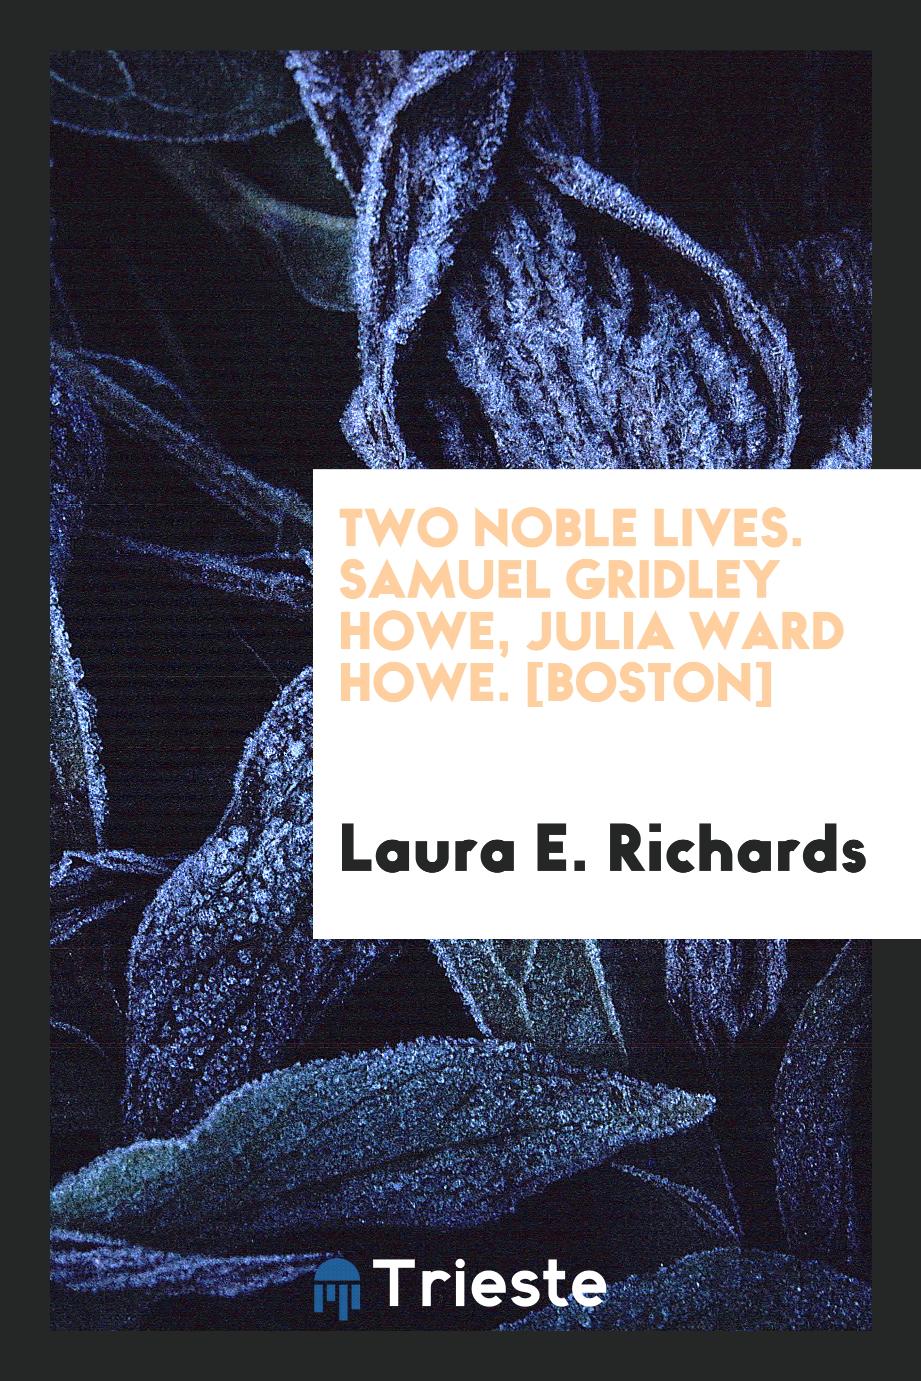 Two Noble Lives. Samuel Gridley Howe, Julia Ward Howe. [Boston]